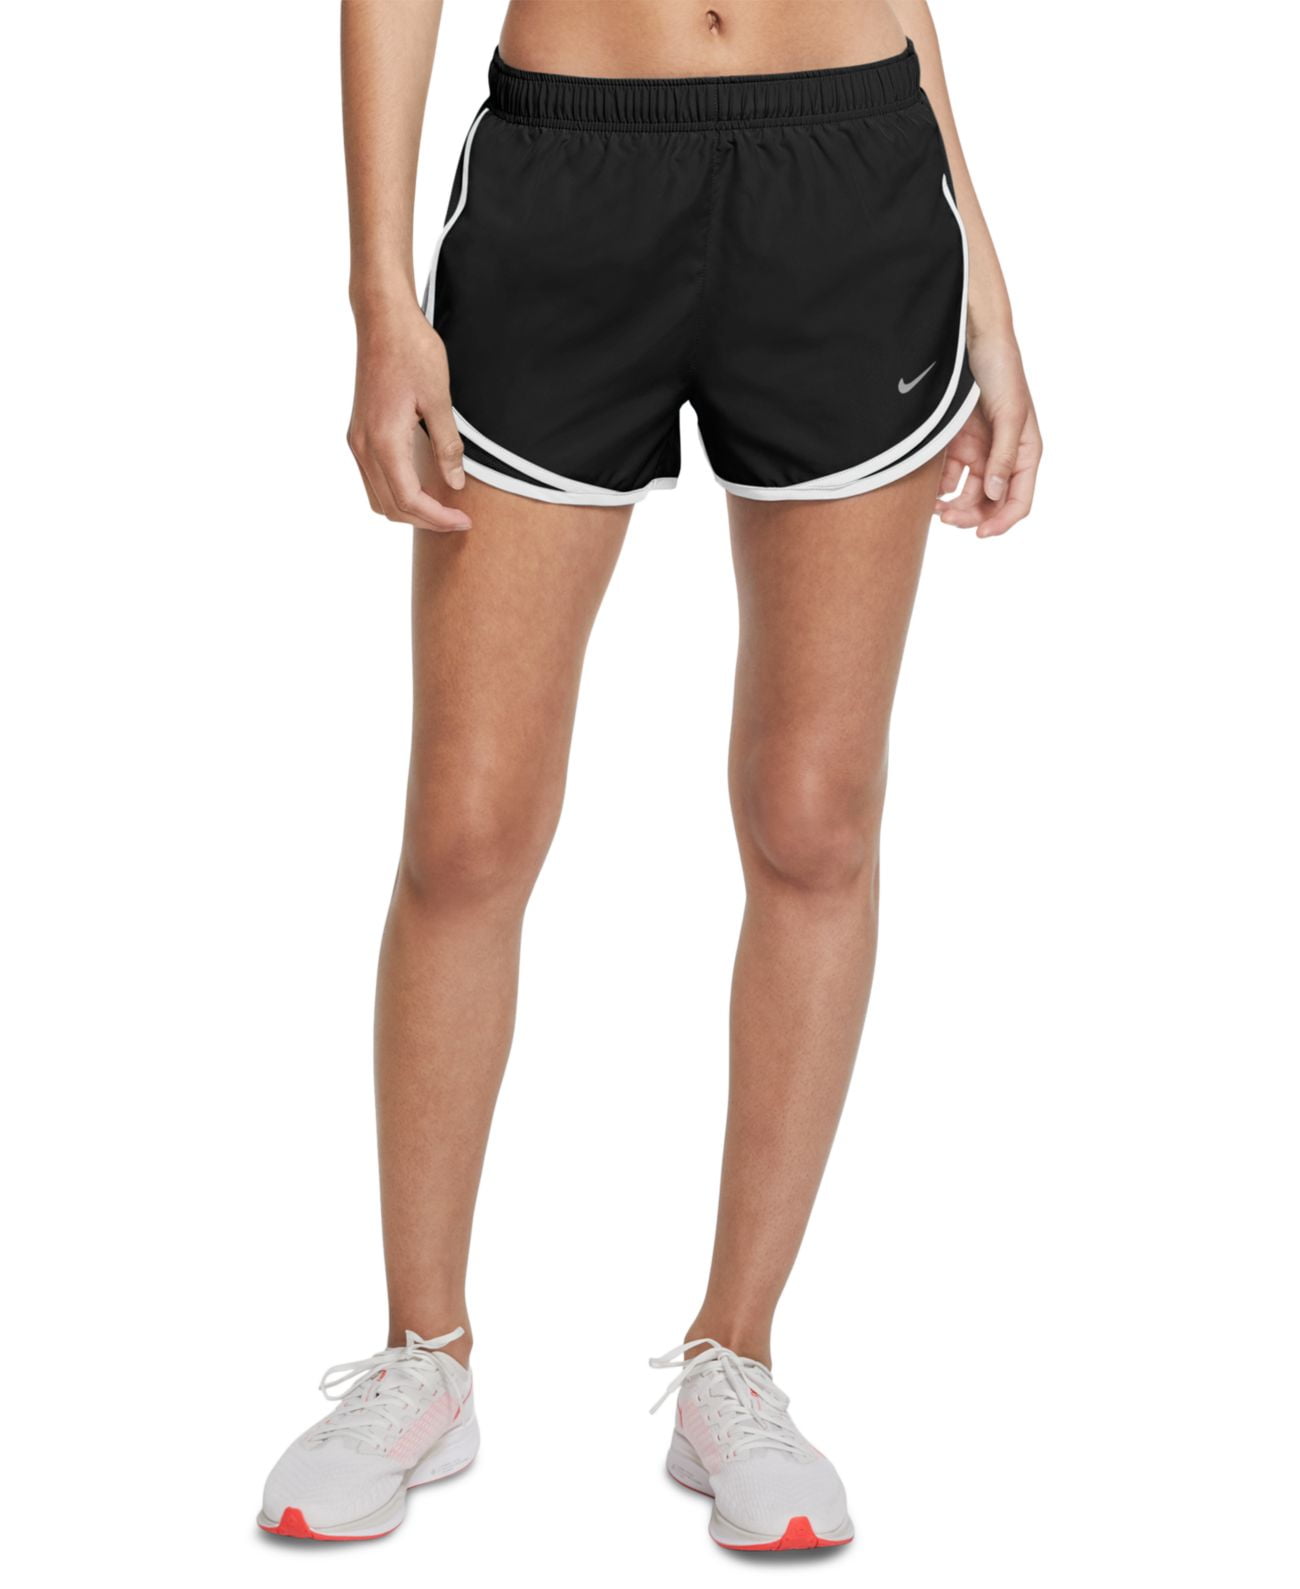 schreeuw Bonus Catastrofaal Nike Womens Dri-fit Solid Tempo Running Shorts - Walmart.com